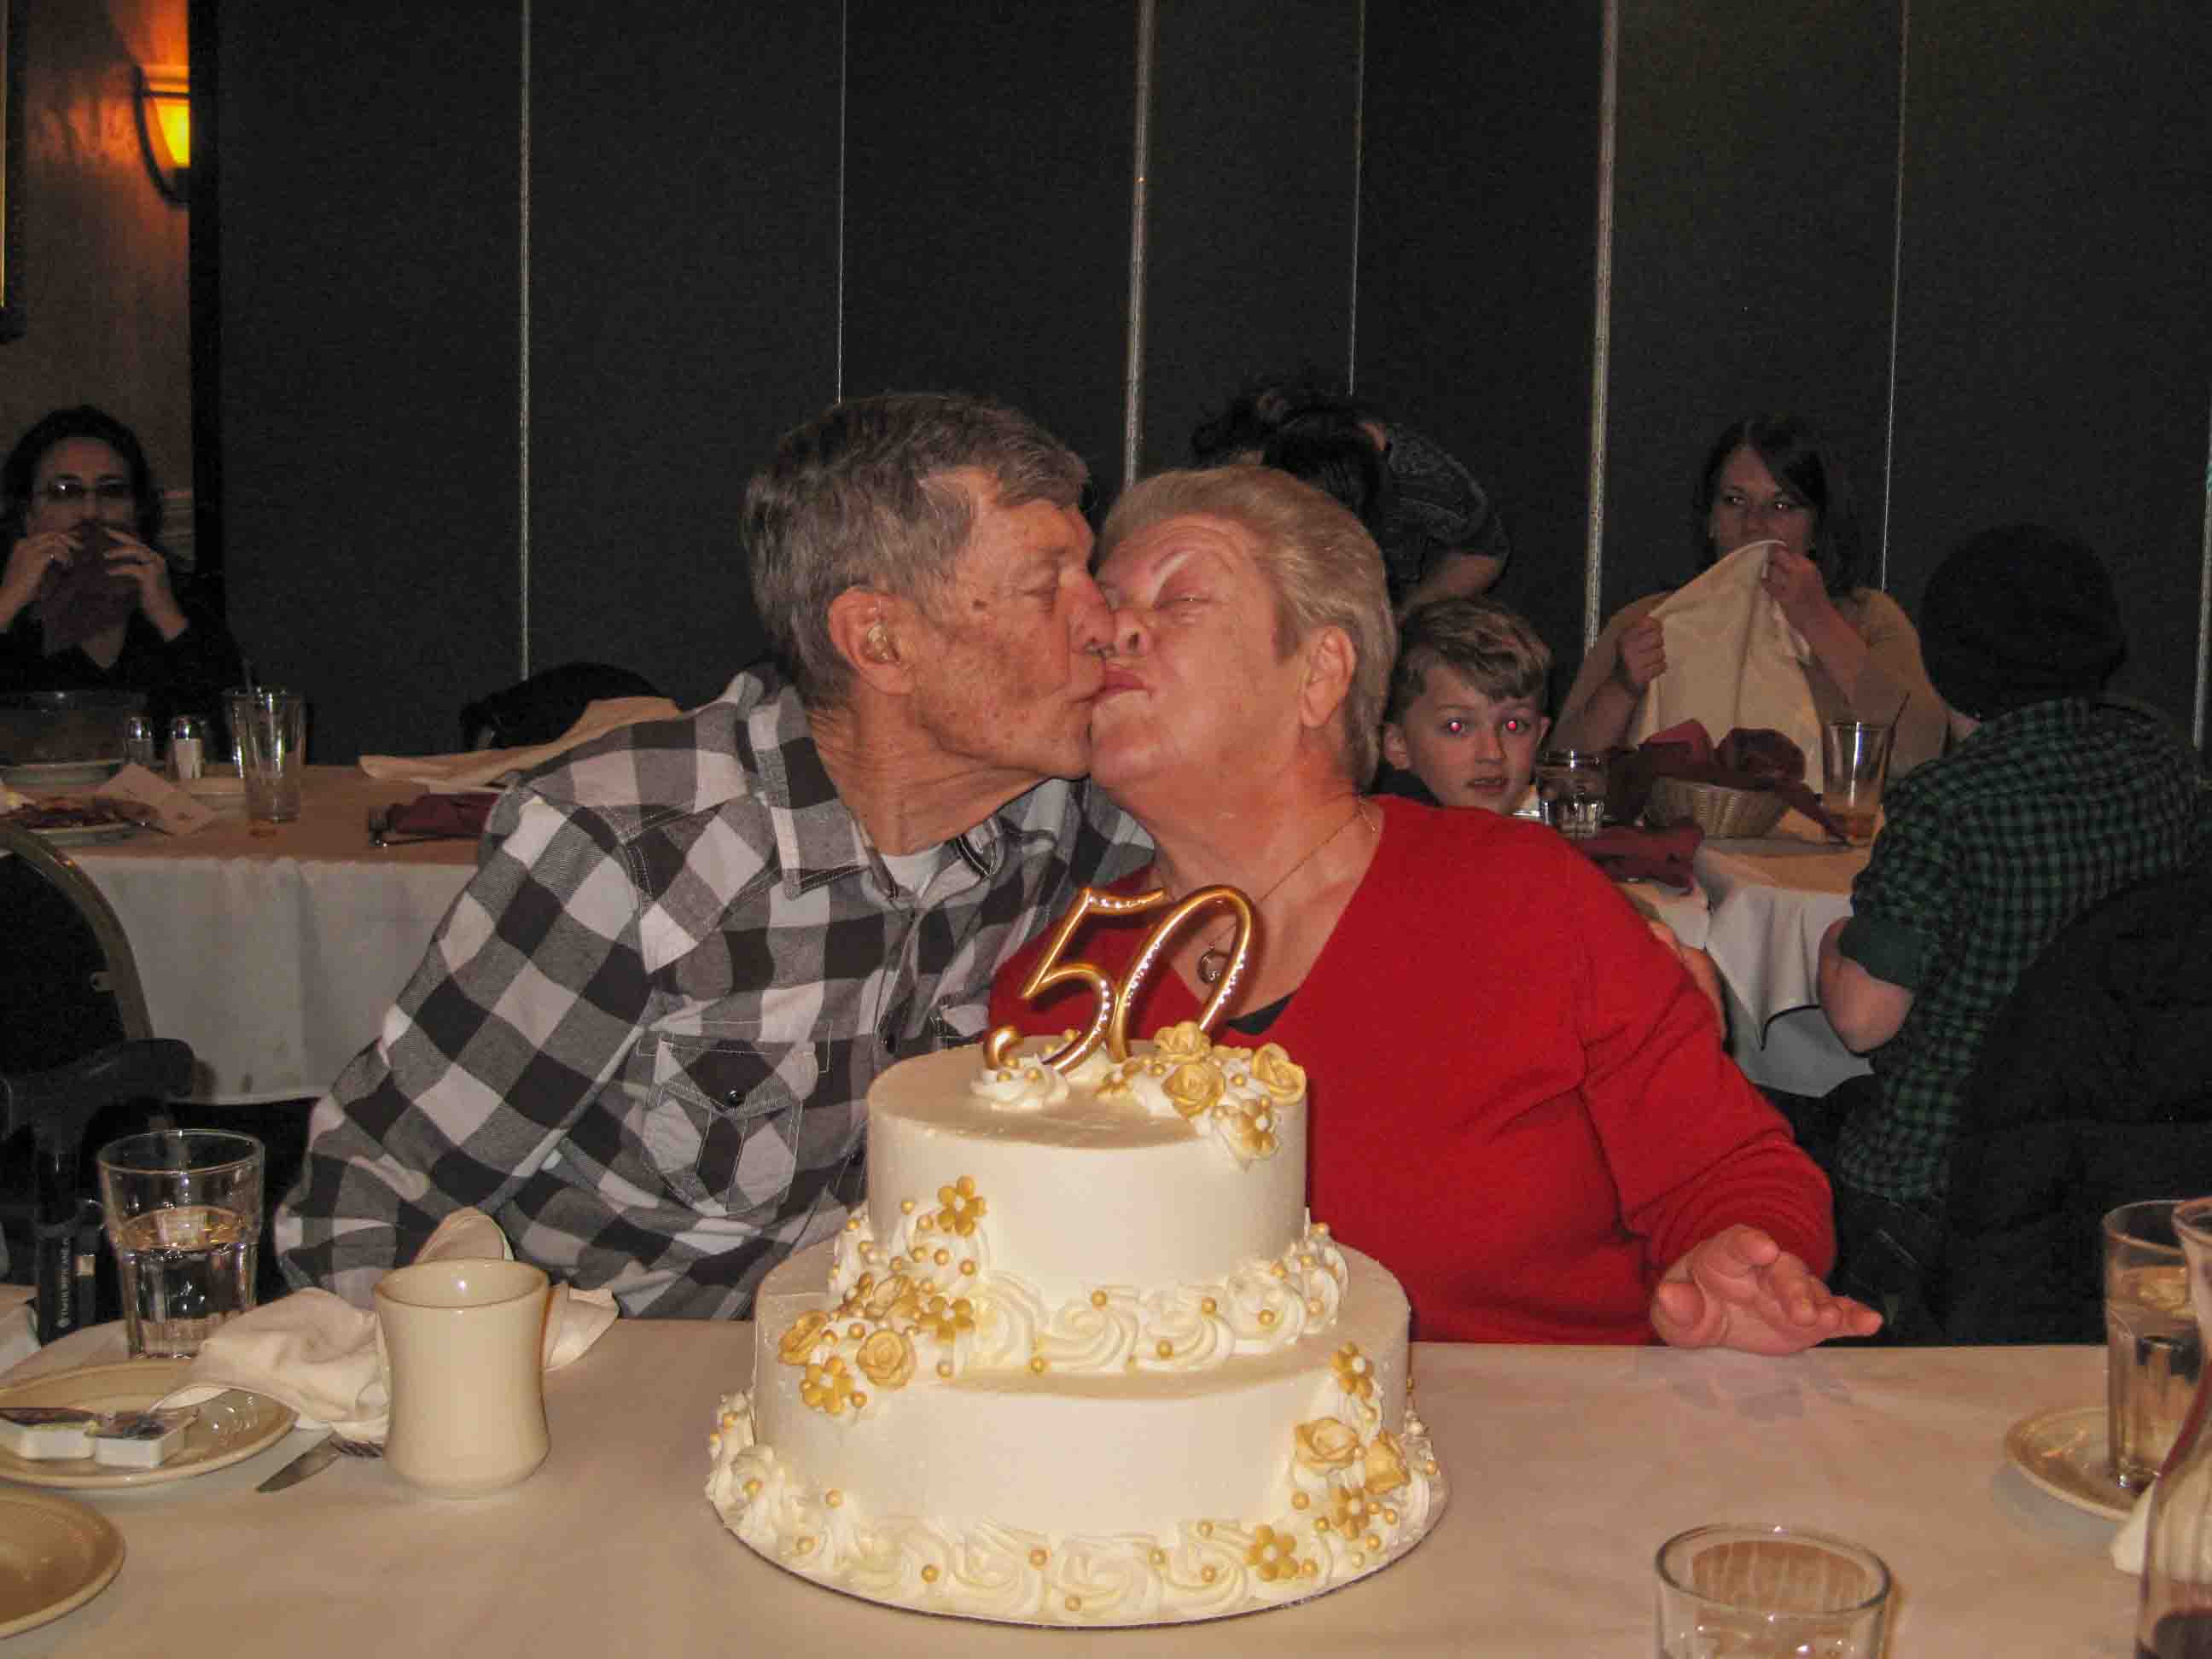 Celebrating the 50th Wedding Anniversary of Shirley & Joel Sexton.
Location:  TAT Restaurant, Columbus OH
Date:  29 Mar 2014
Source:  Julane Crabtree